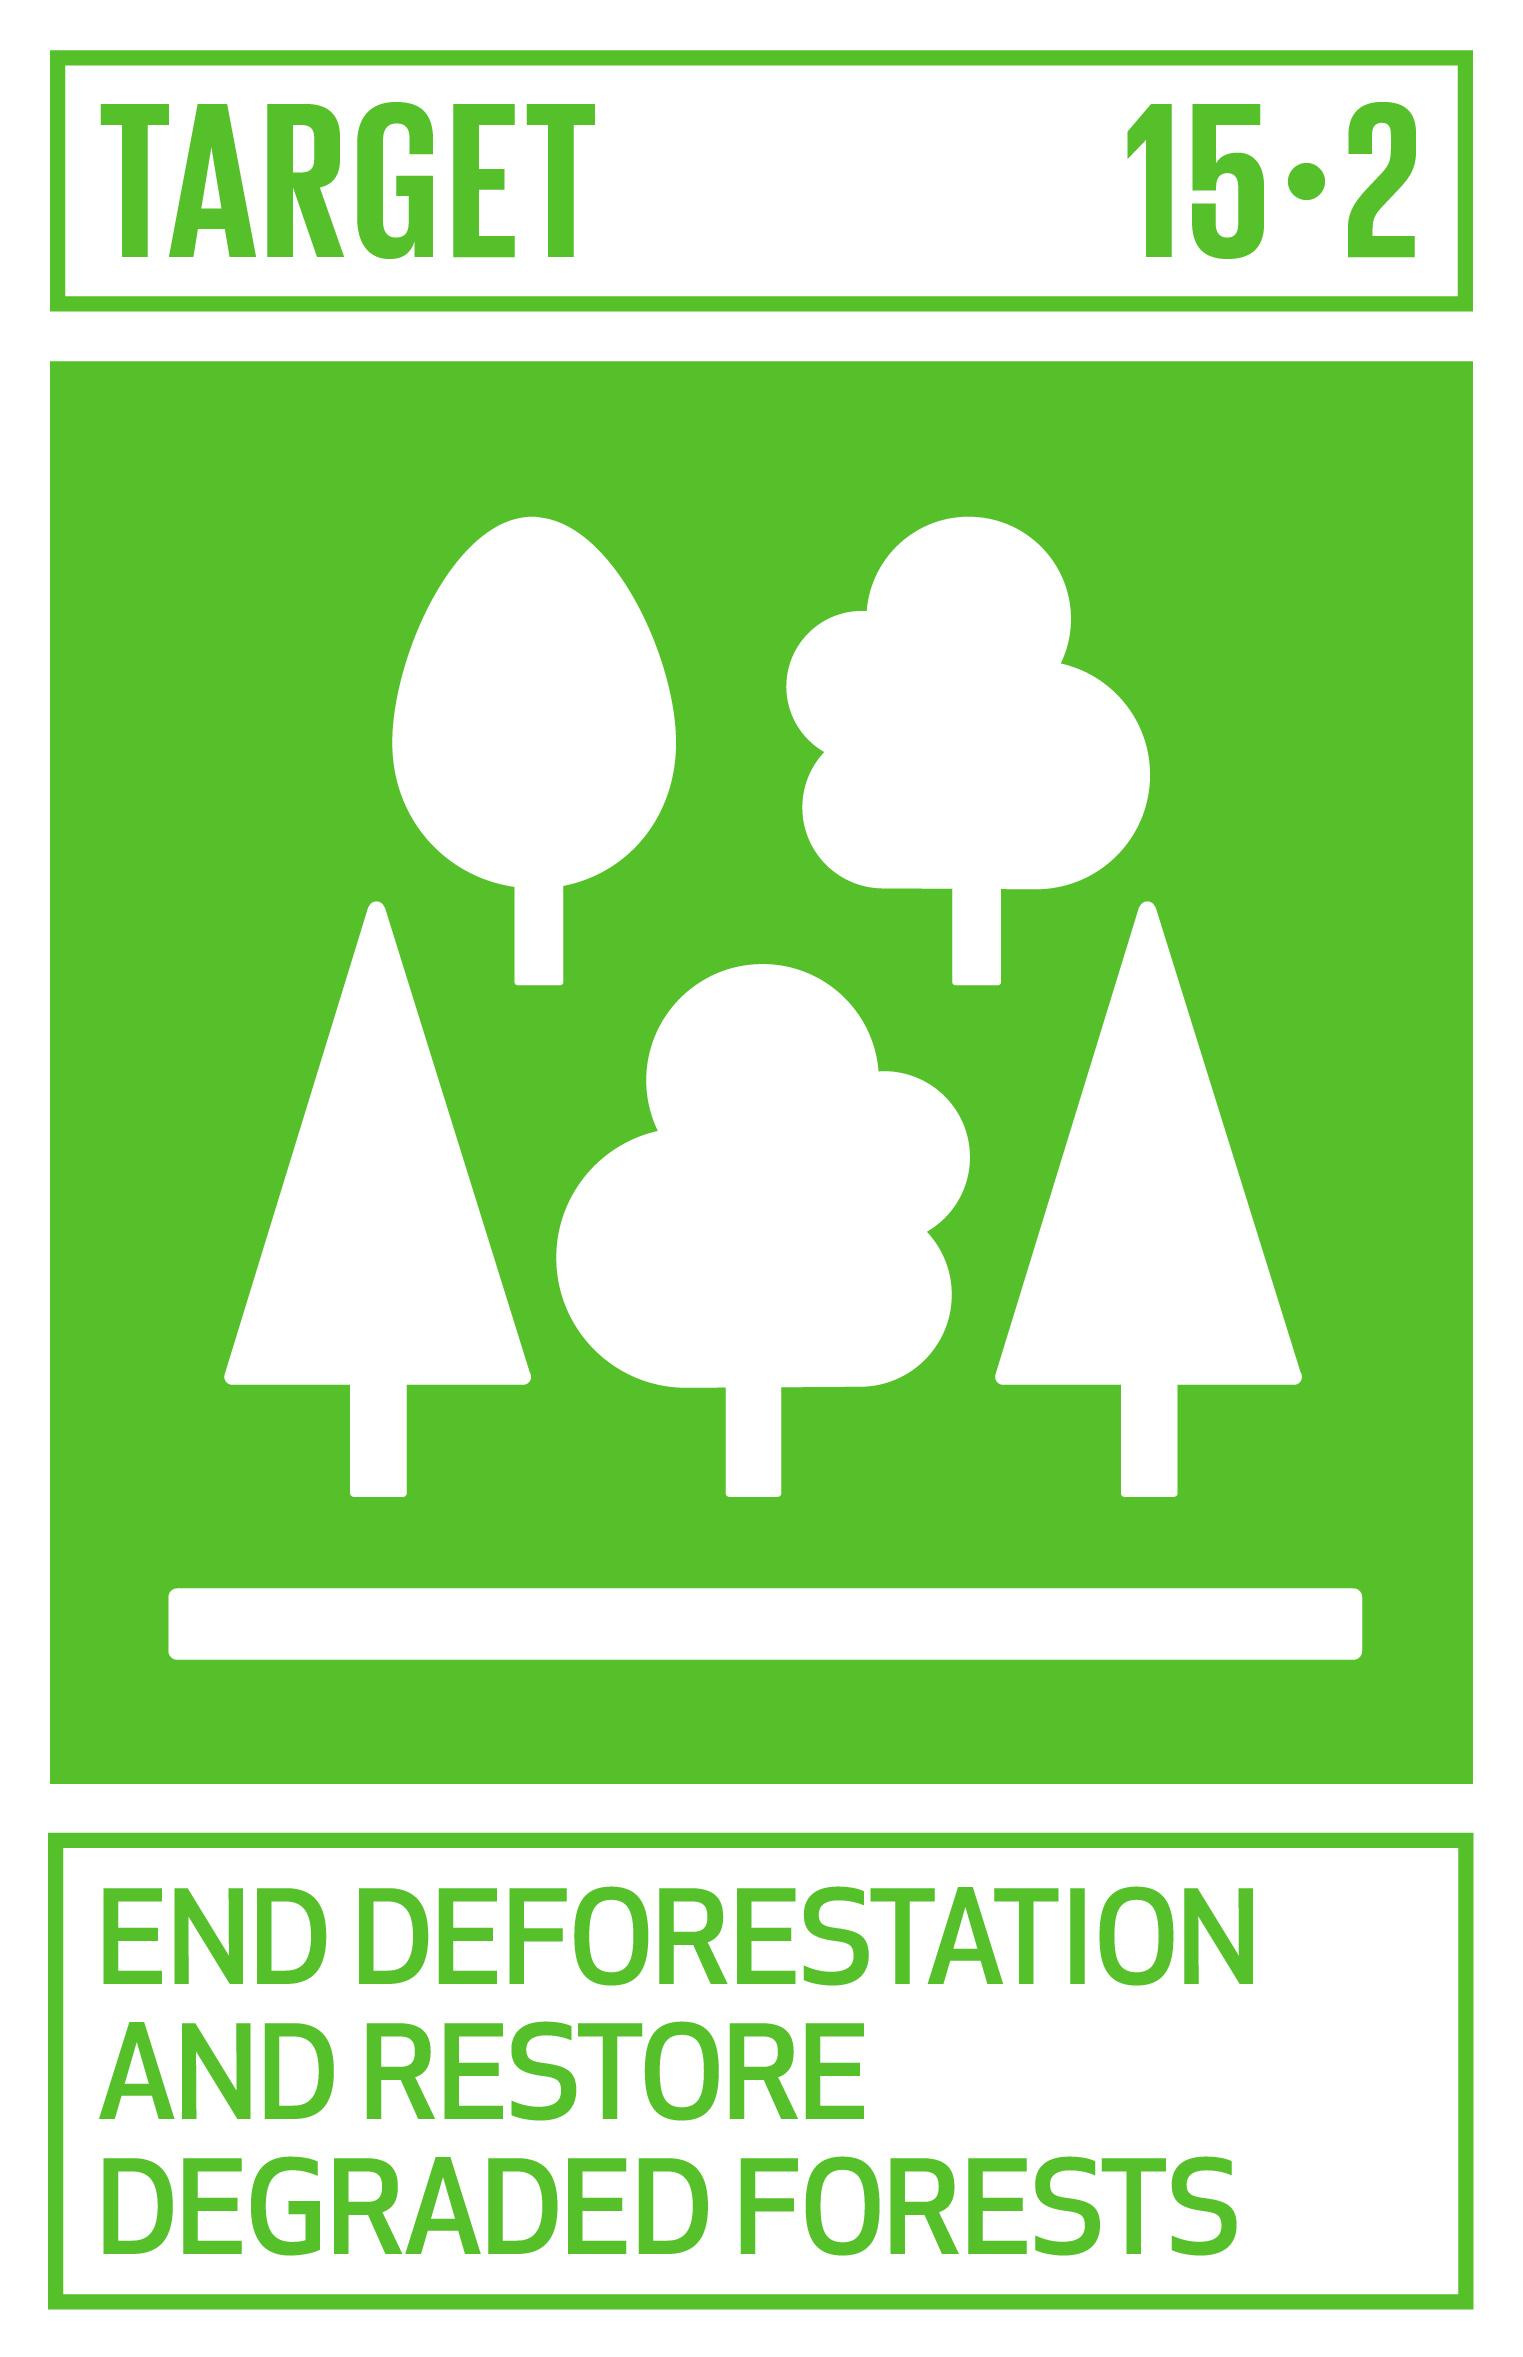 Goal,target,永續發展目標SDGs15,目標15.2結束砍伐森林和恢復退化森林